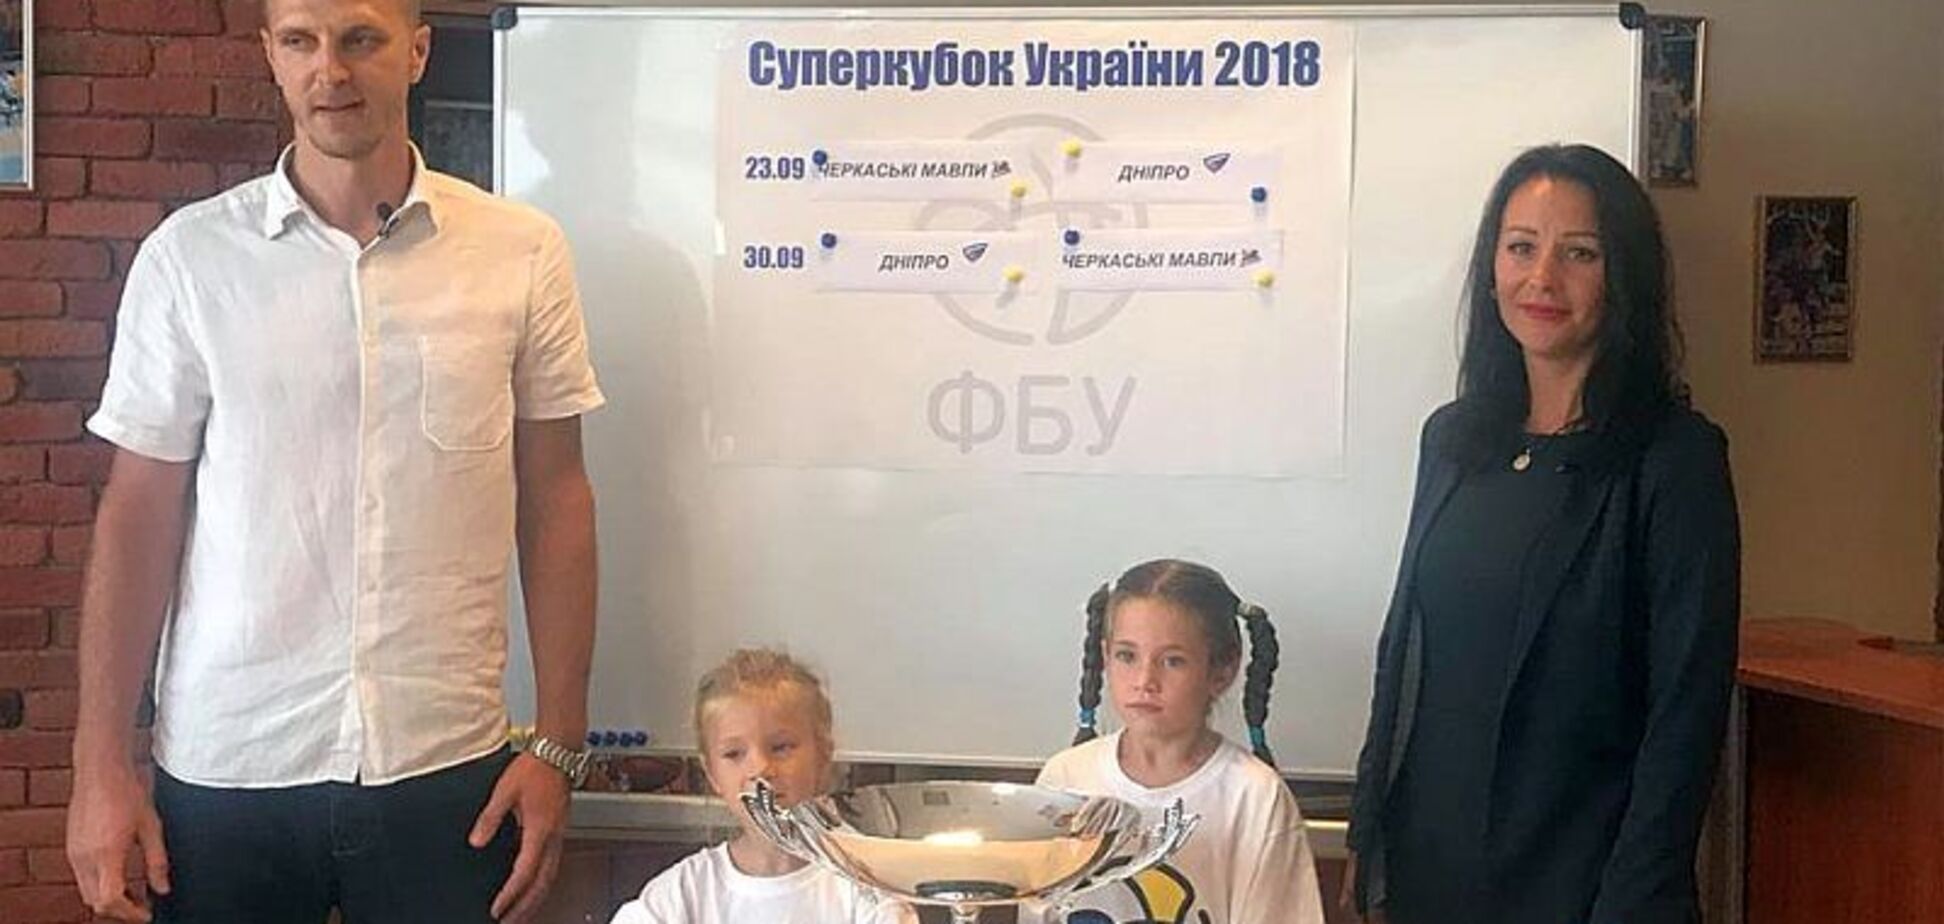 Суперкубок Украины: ФБУ провела жеребьевку